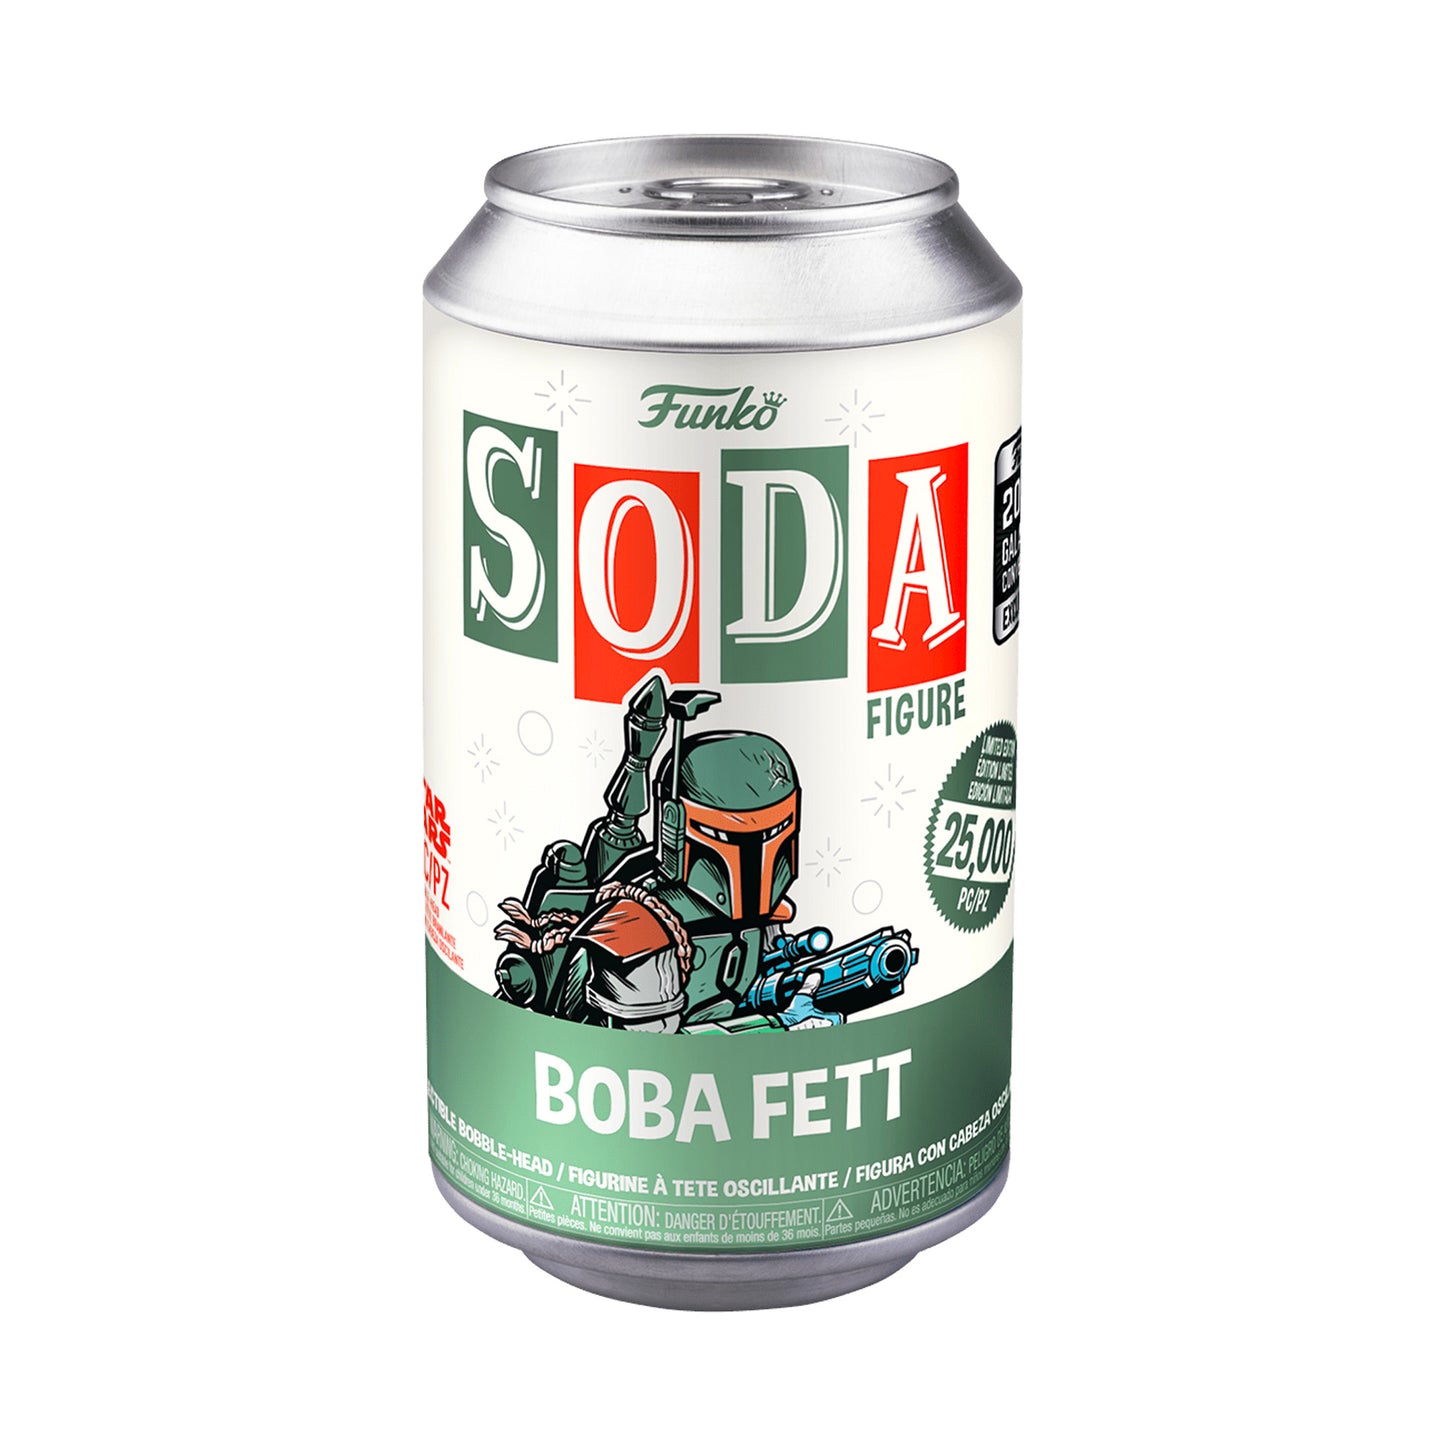 Funko Vinyl SODA: Boba Fett 25,000 Limited Edition (1 in 6 Chance at Chase)